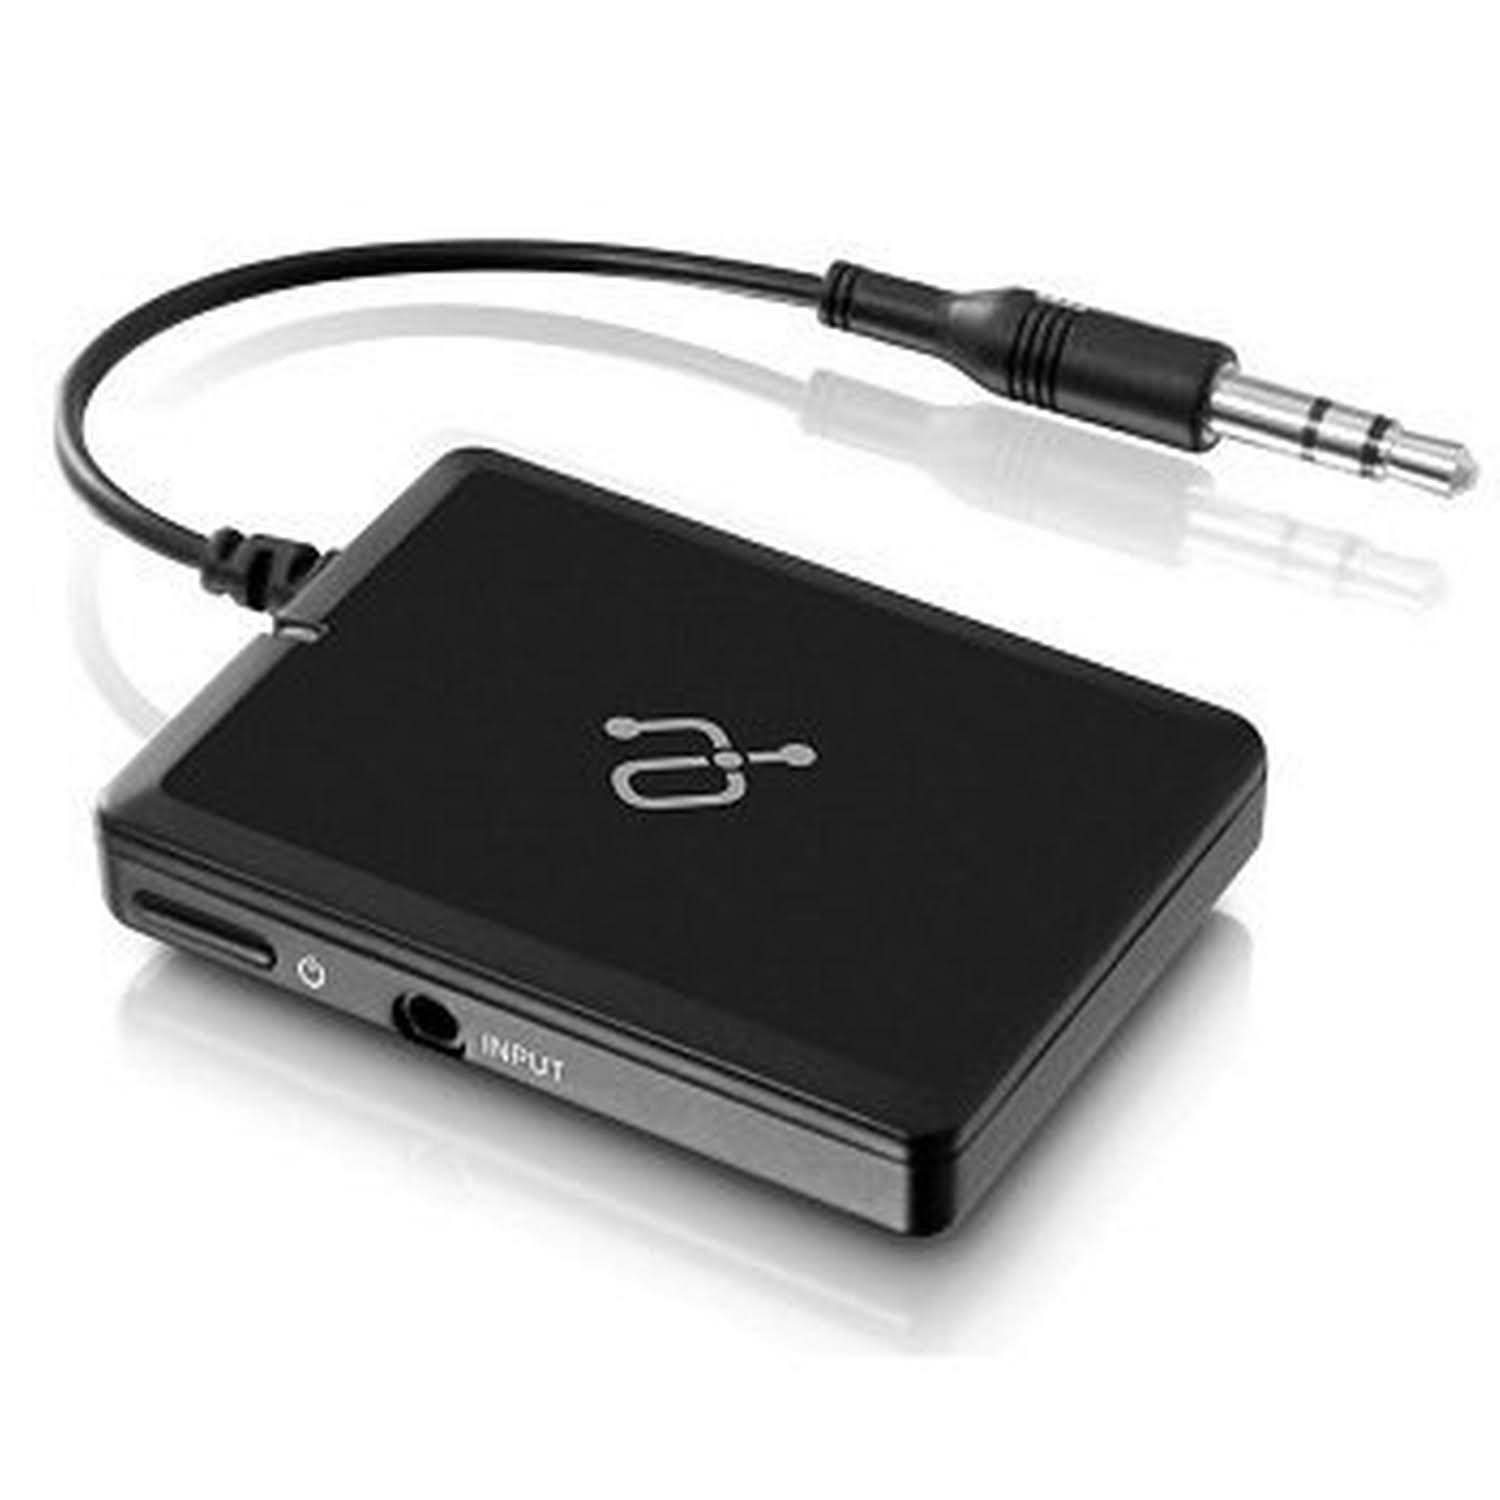 Aluratek Istream Universal Bluetooth Audio Receiver - Black